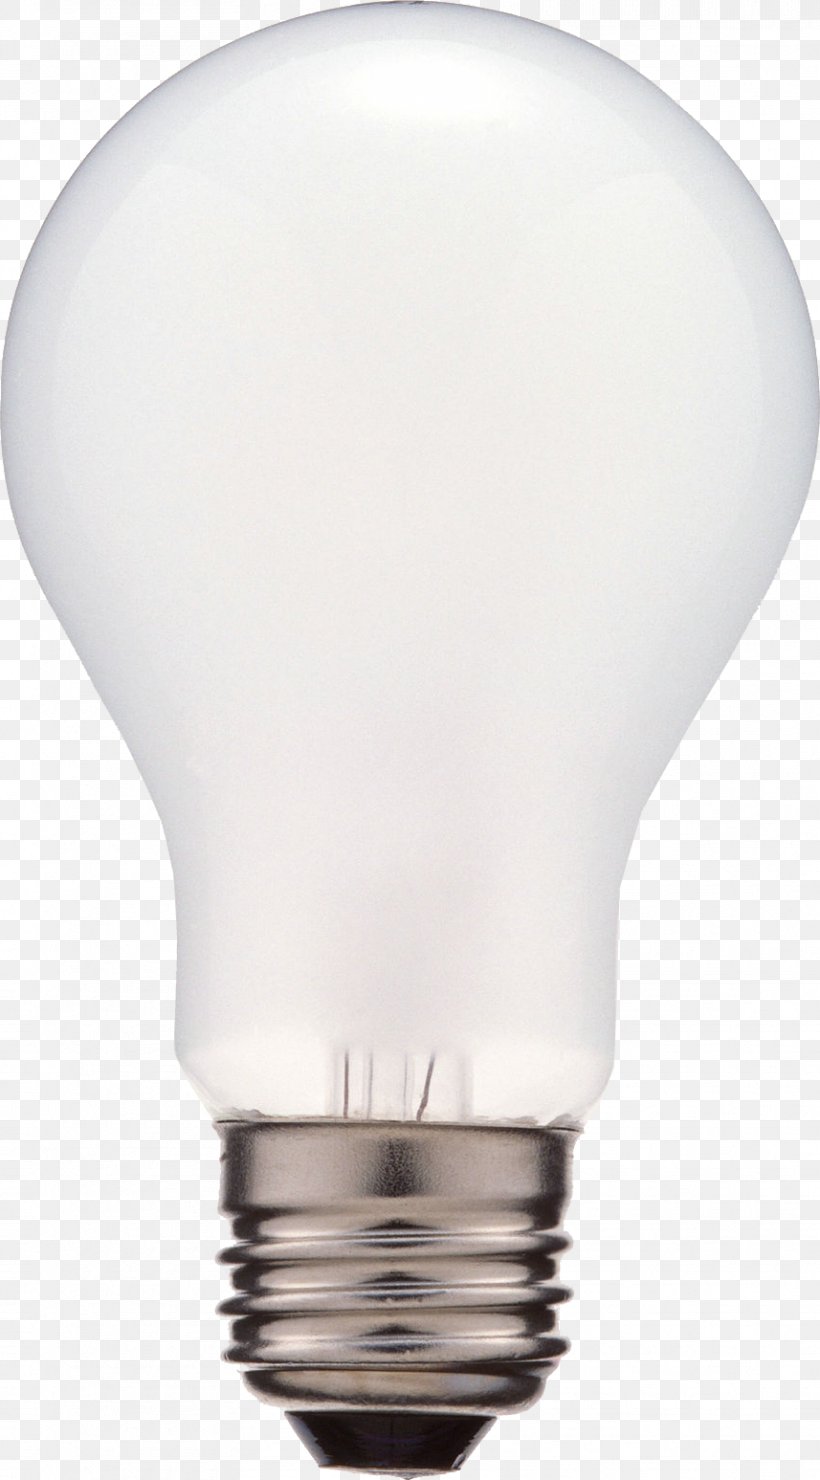 Incandescent Light Bulb Zongzi Lamp, PNG, 857x1547px, Light, Dragon Boat Festival, Incandescence, Incandescent Light Bulb, Lamp Download Free